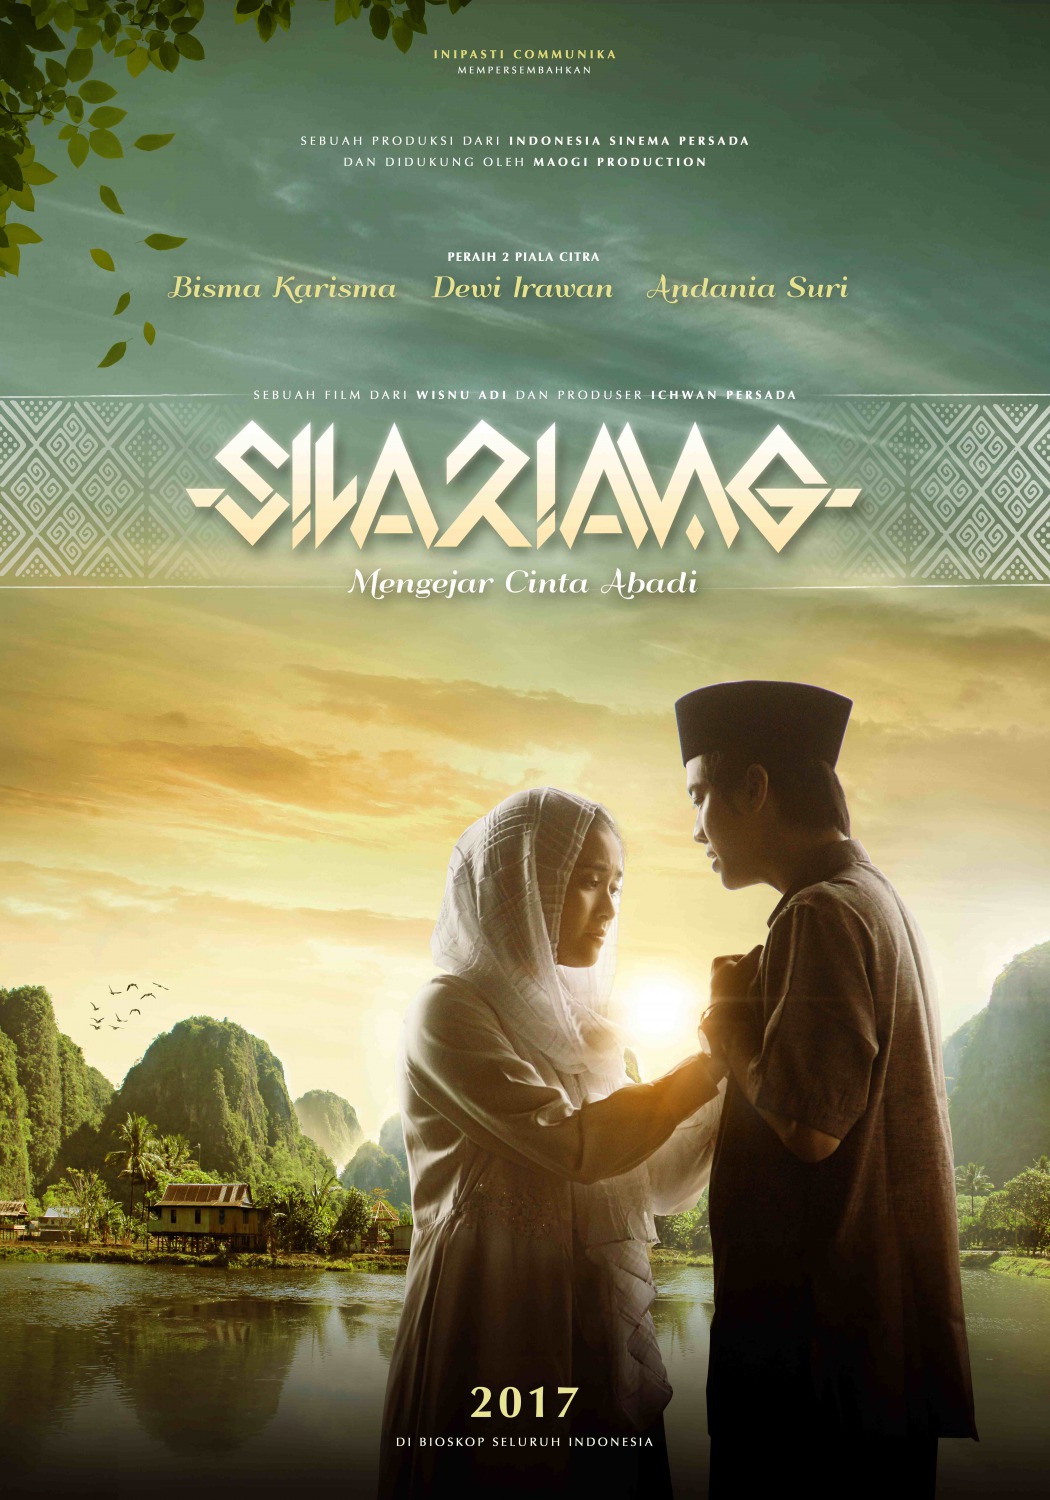 Extra Large Movie Poster Image for Silariang: Mengejar Cinta Abadi 